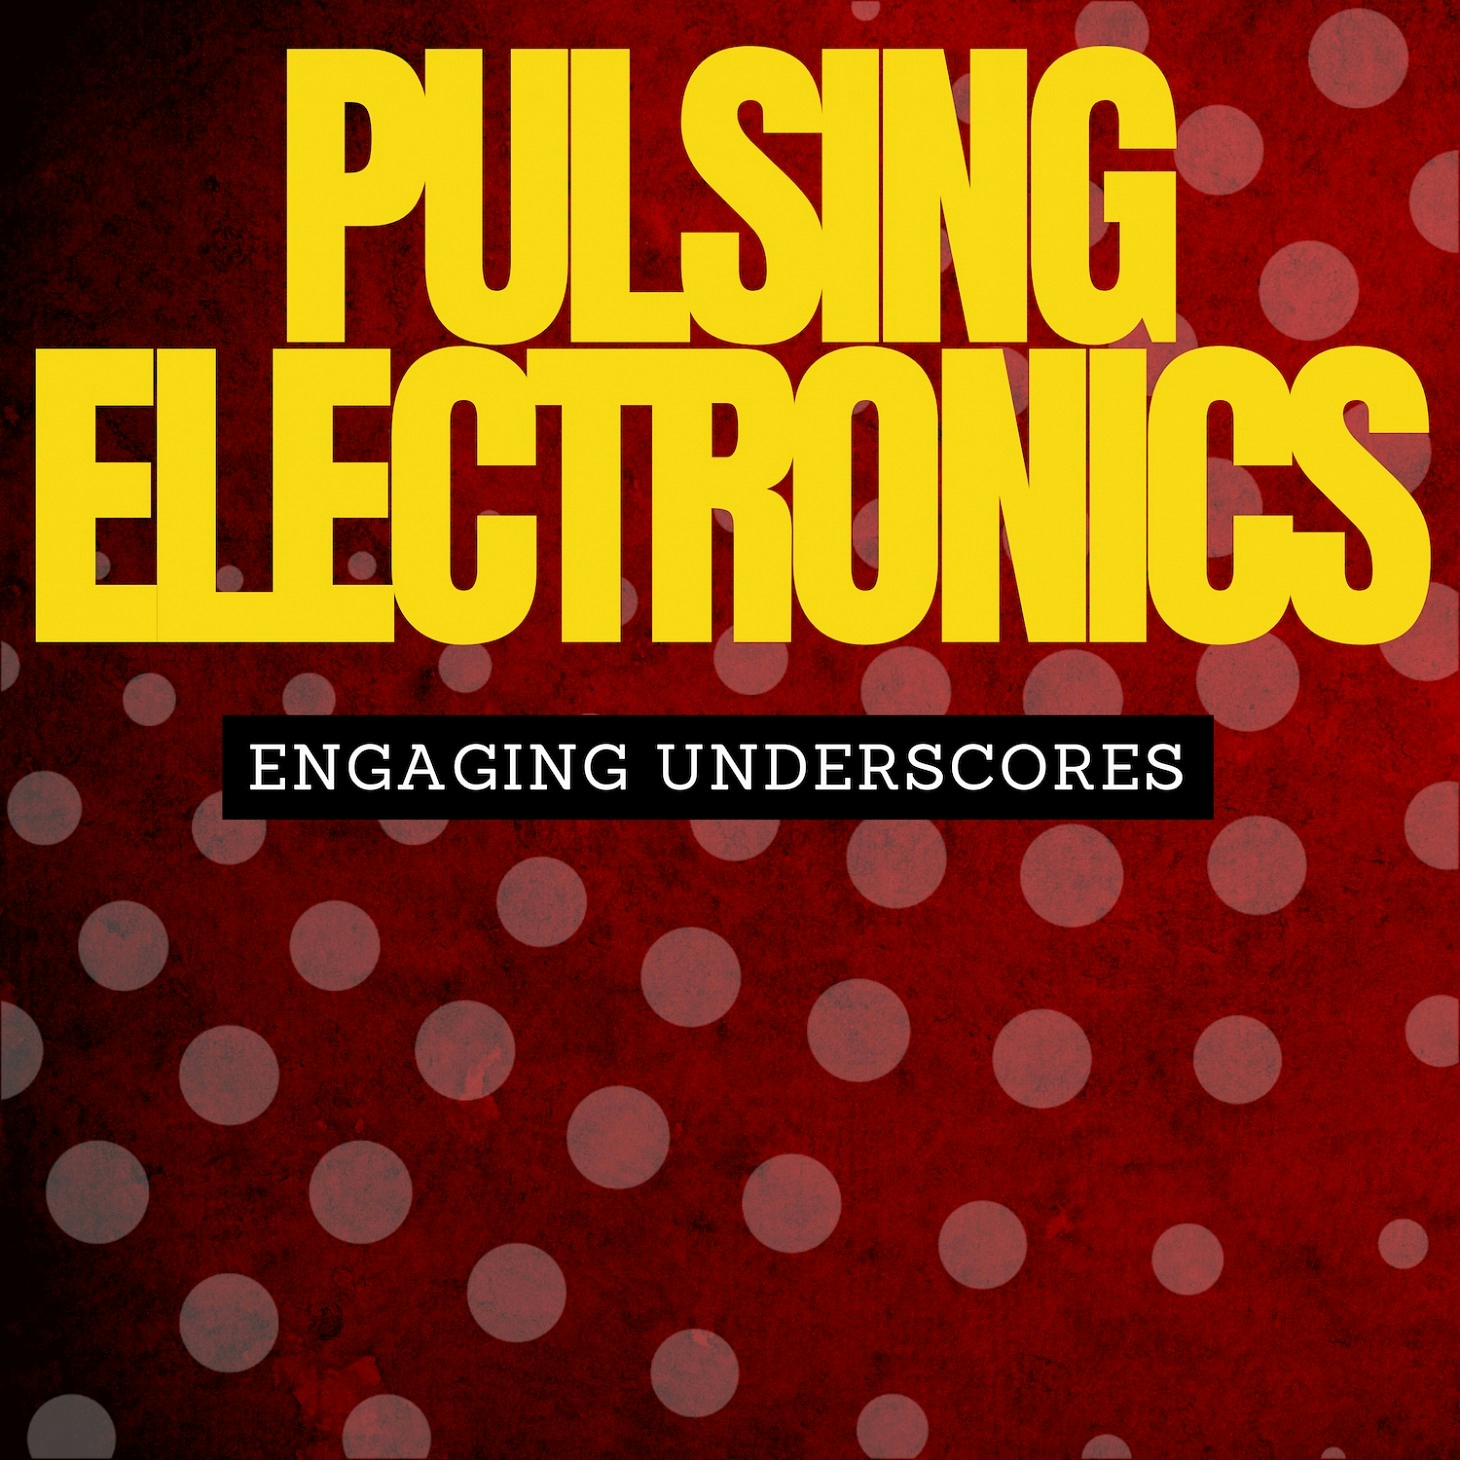 Pulsing Electronics